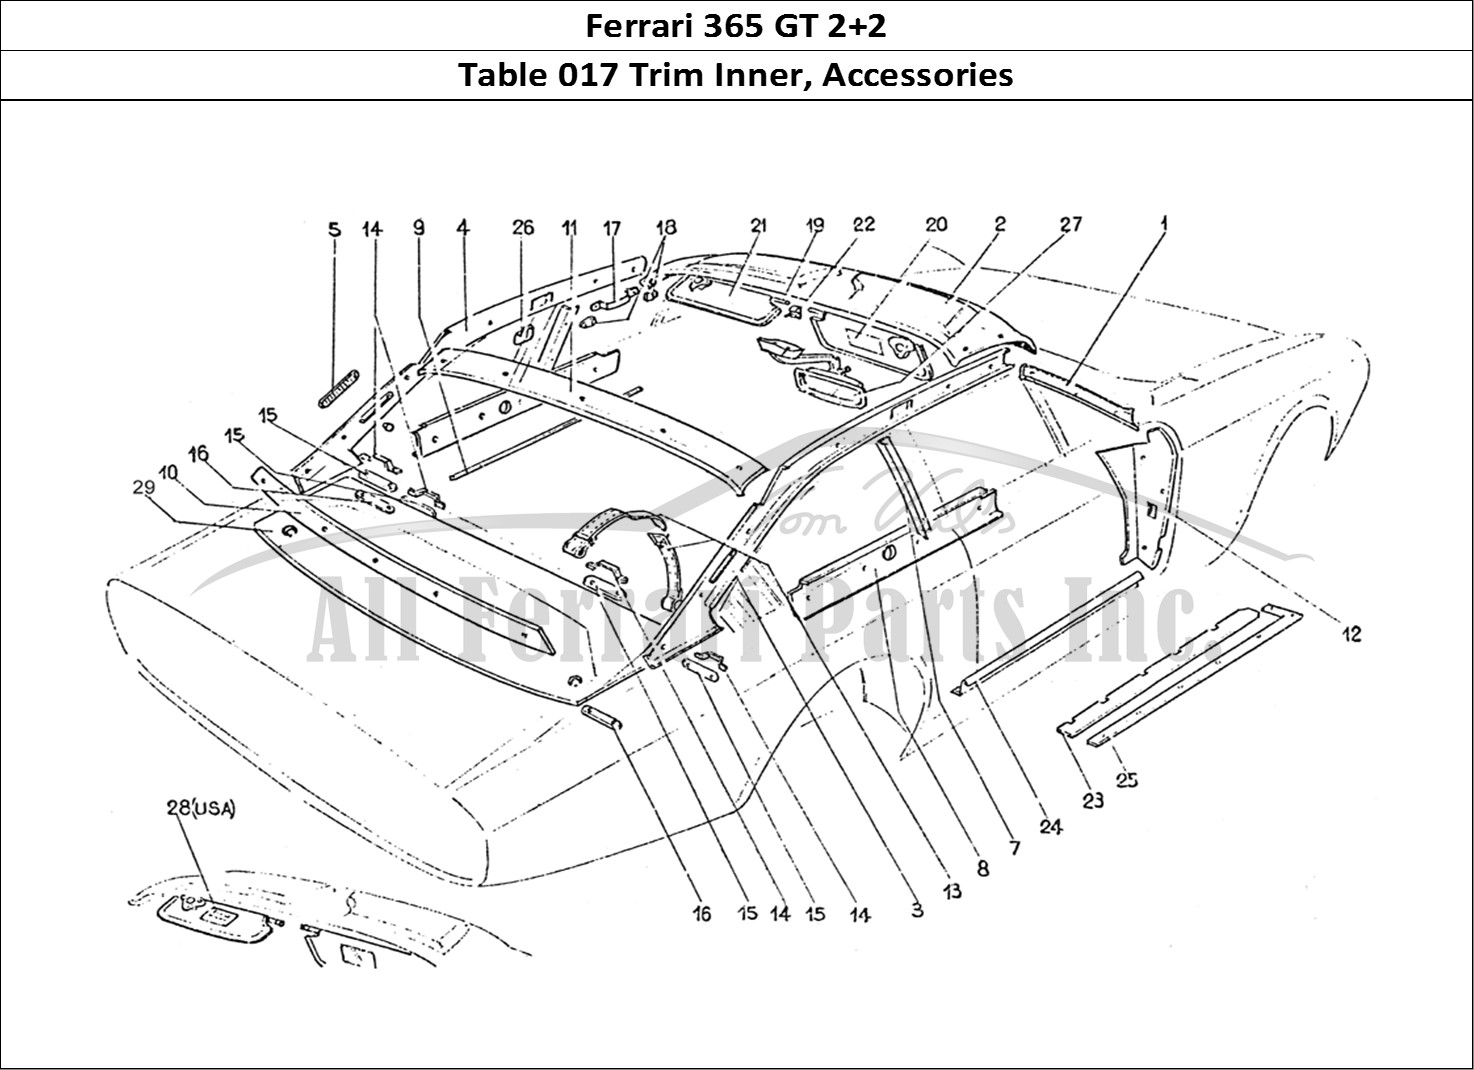 Ferrari Parts Ferrari 365 GT 2+2 (Coachwork) Page 017 Inner trim & Accessories